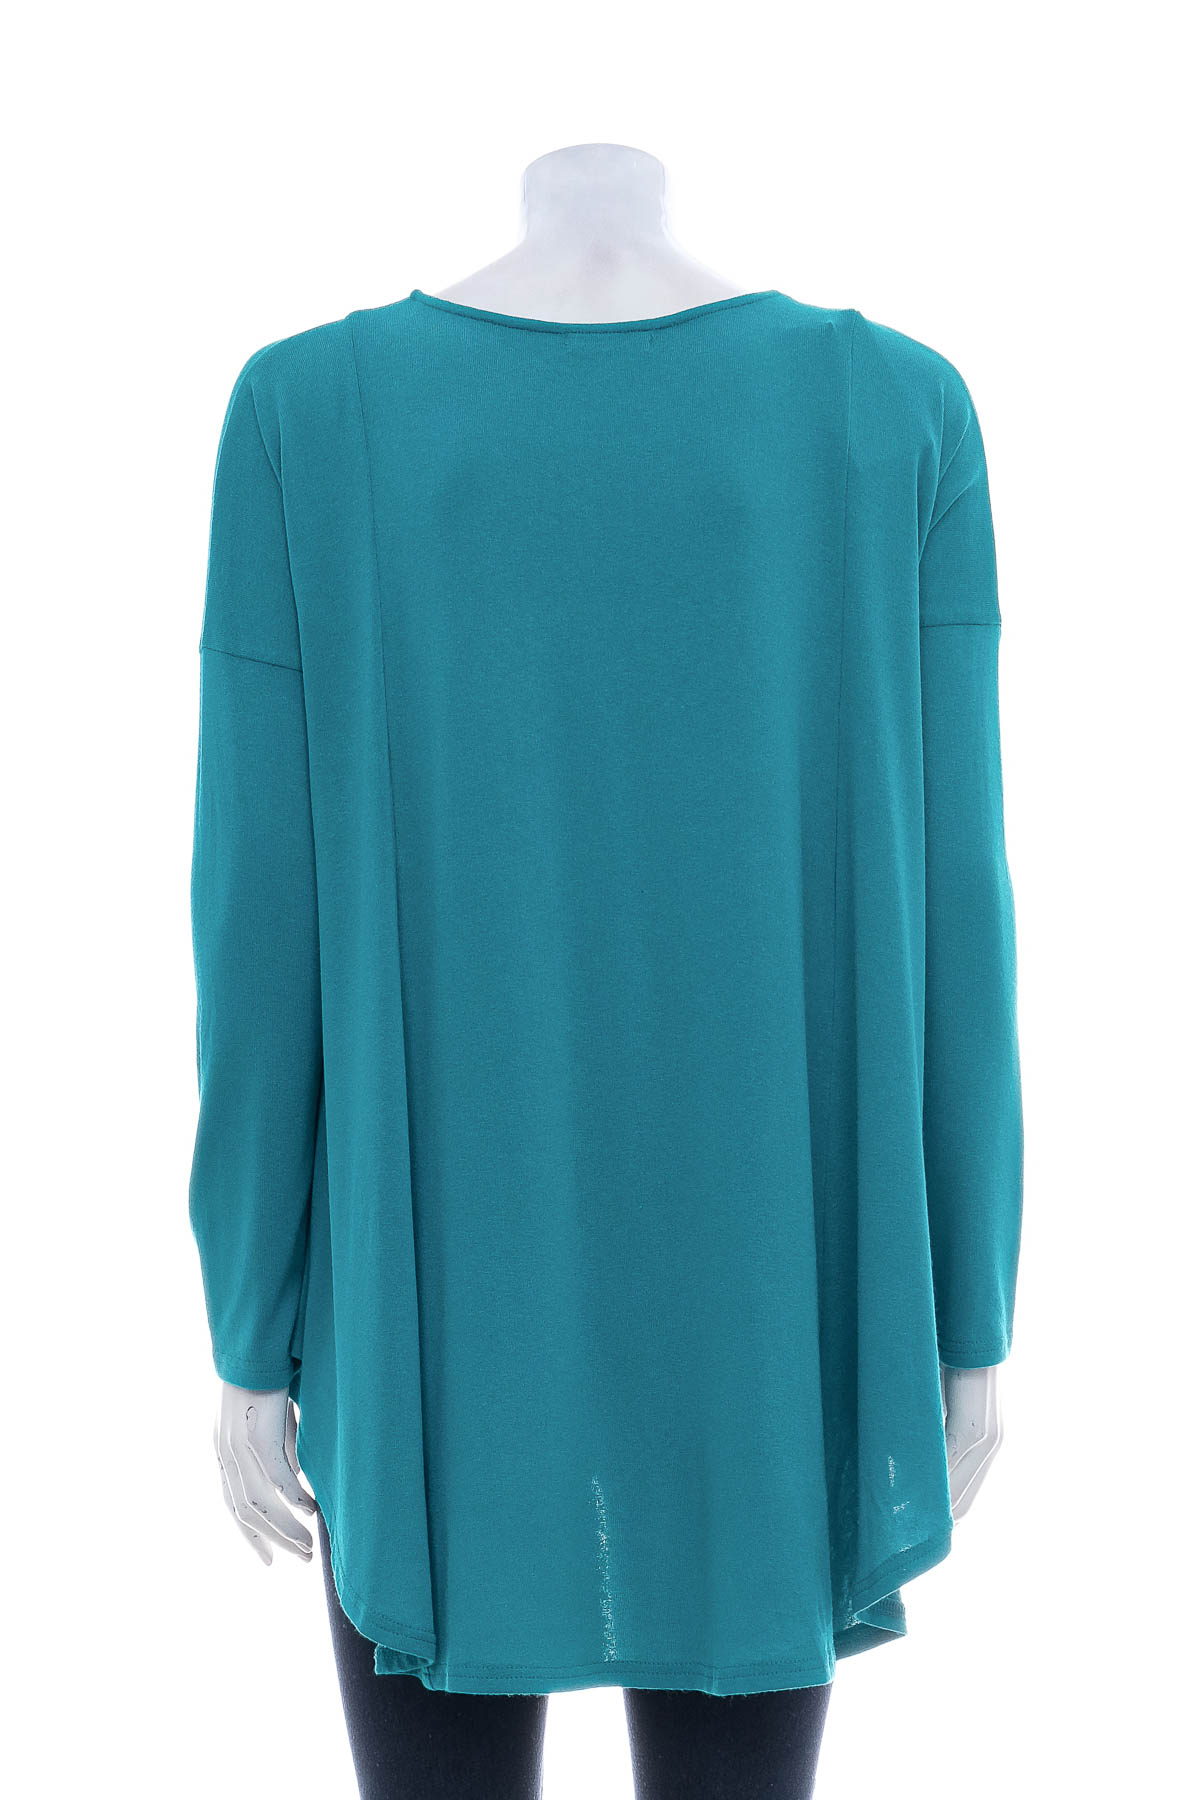 Women's blouse - Camille & Co. - 1